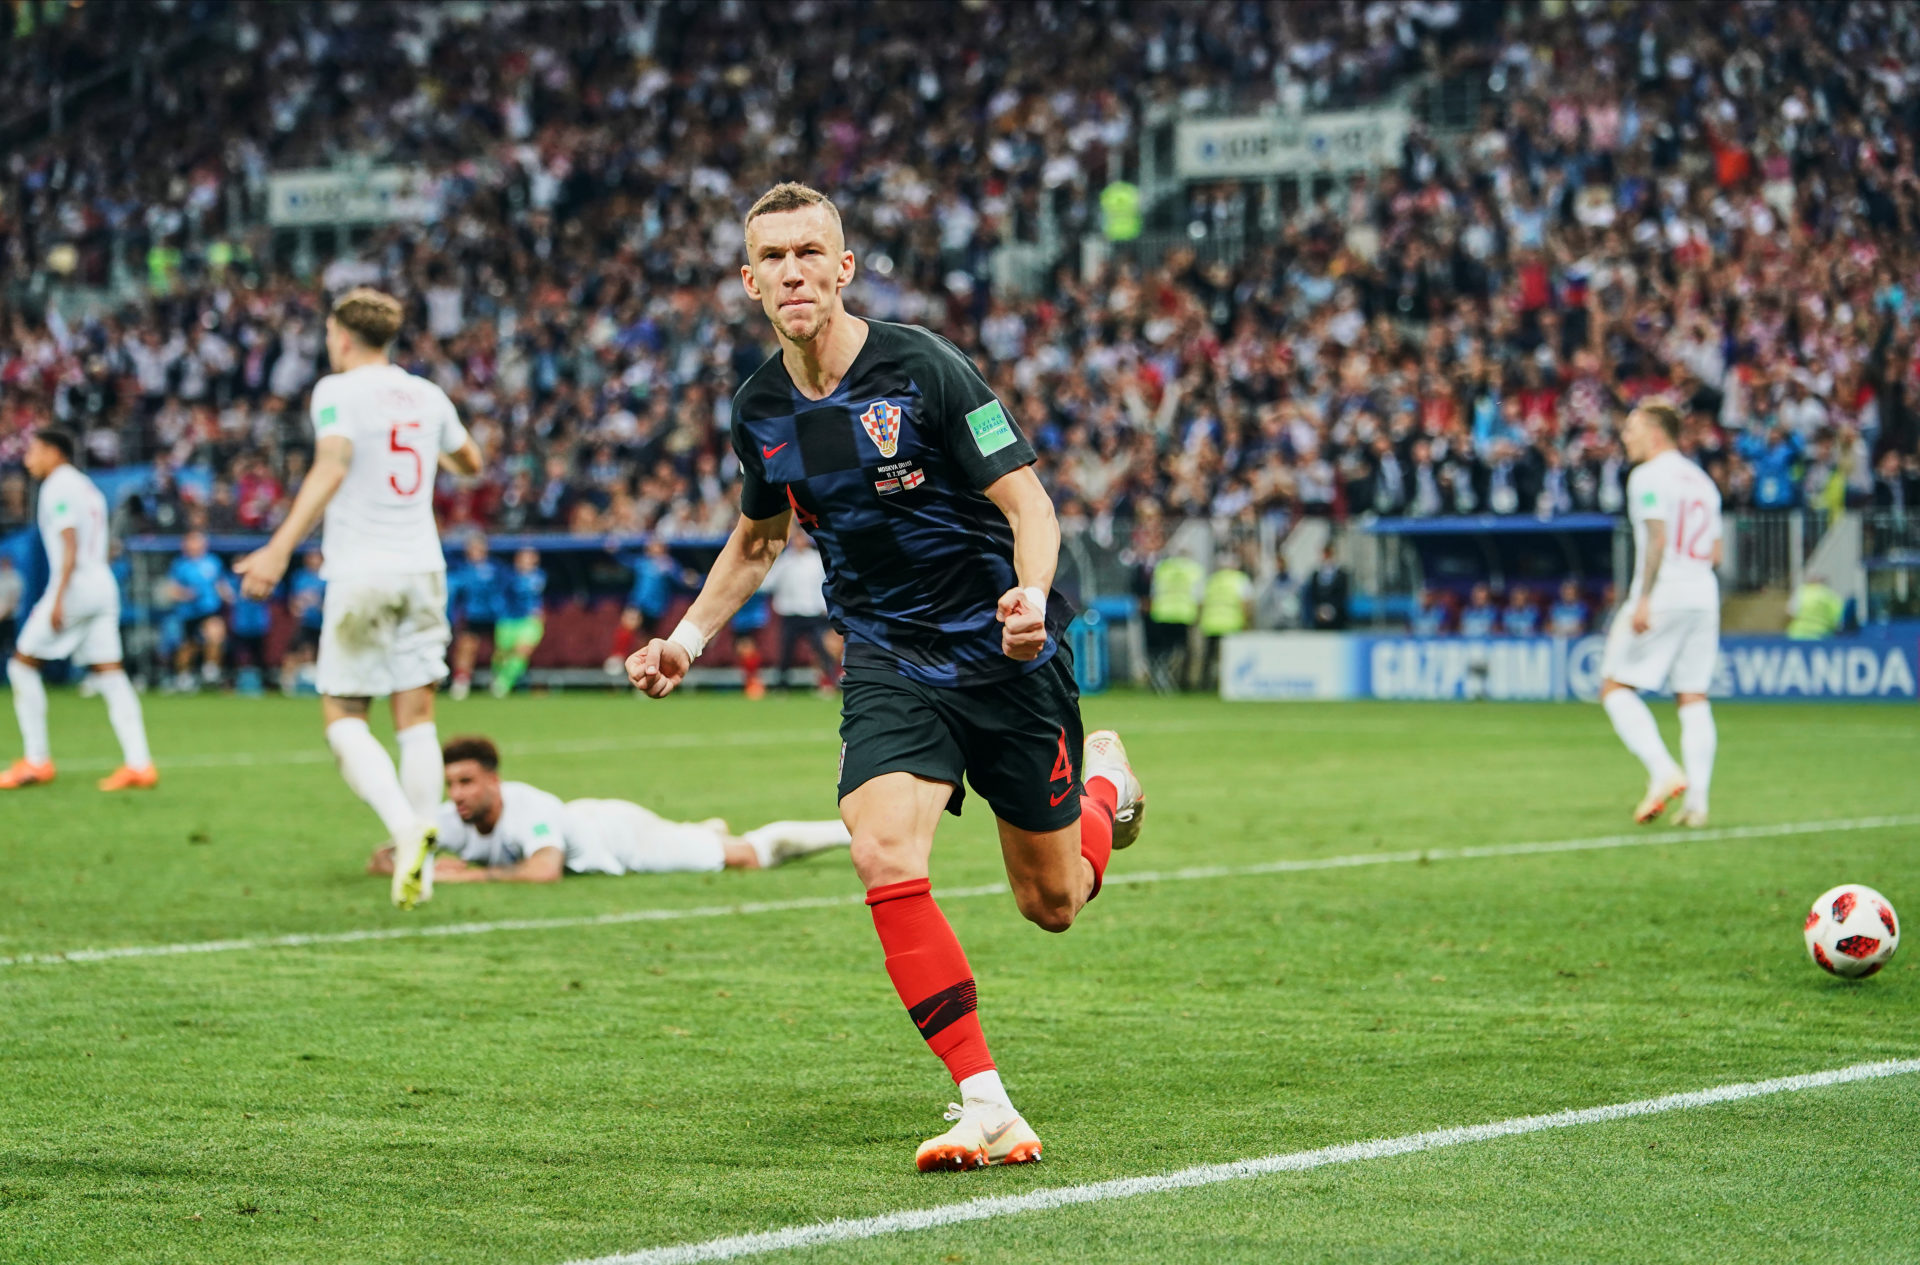 FIFA World Cup - England against Croatia in the Semi final